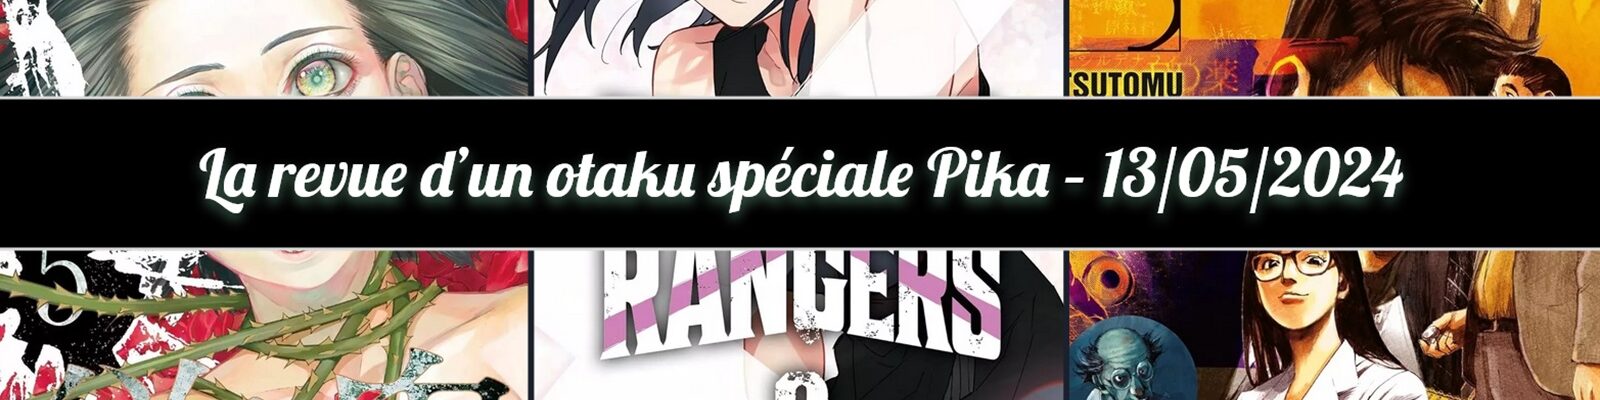 Pika - No Longer Rangers